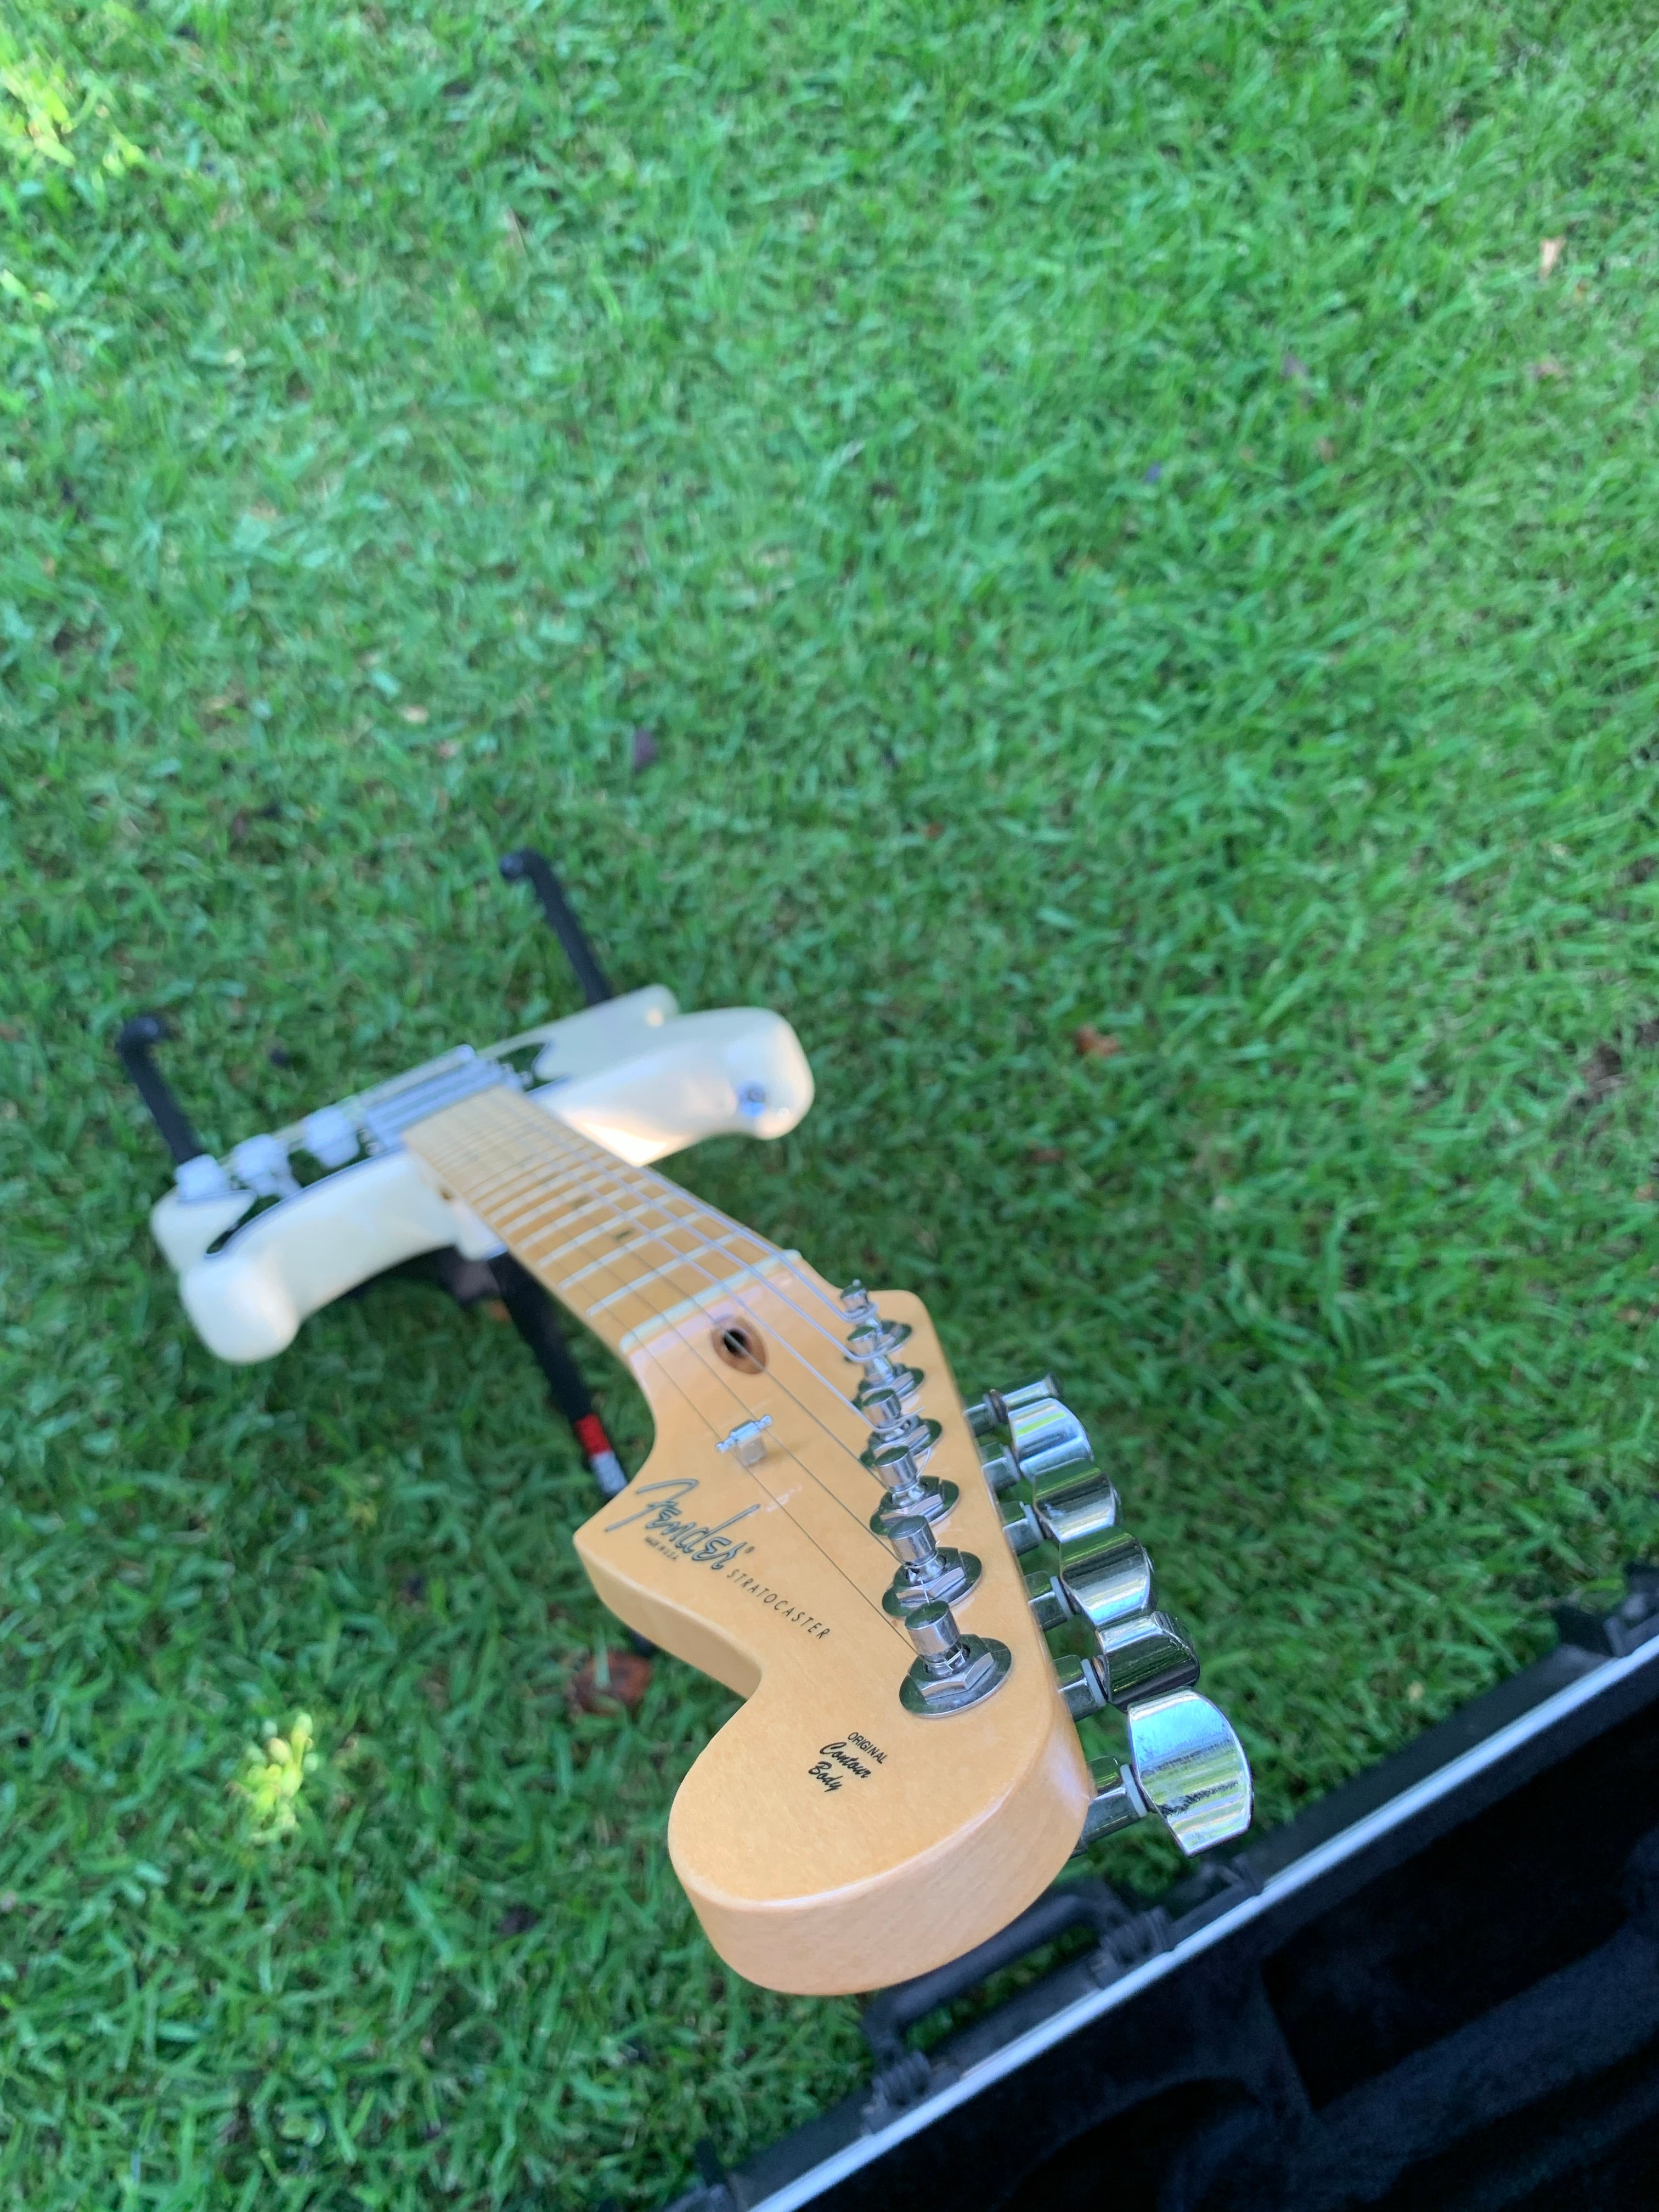 Fender American Standard Stratocaster 2008/9 Billy corgan upgrade